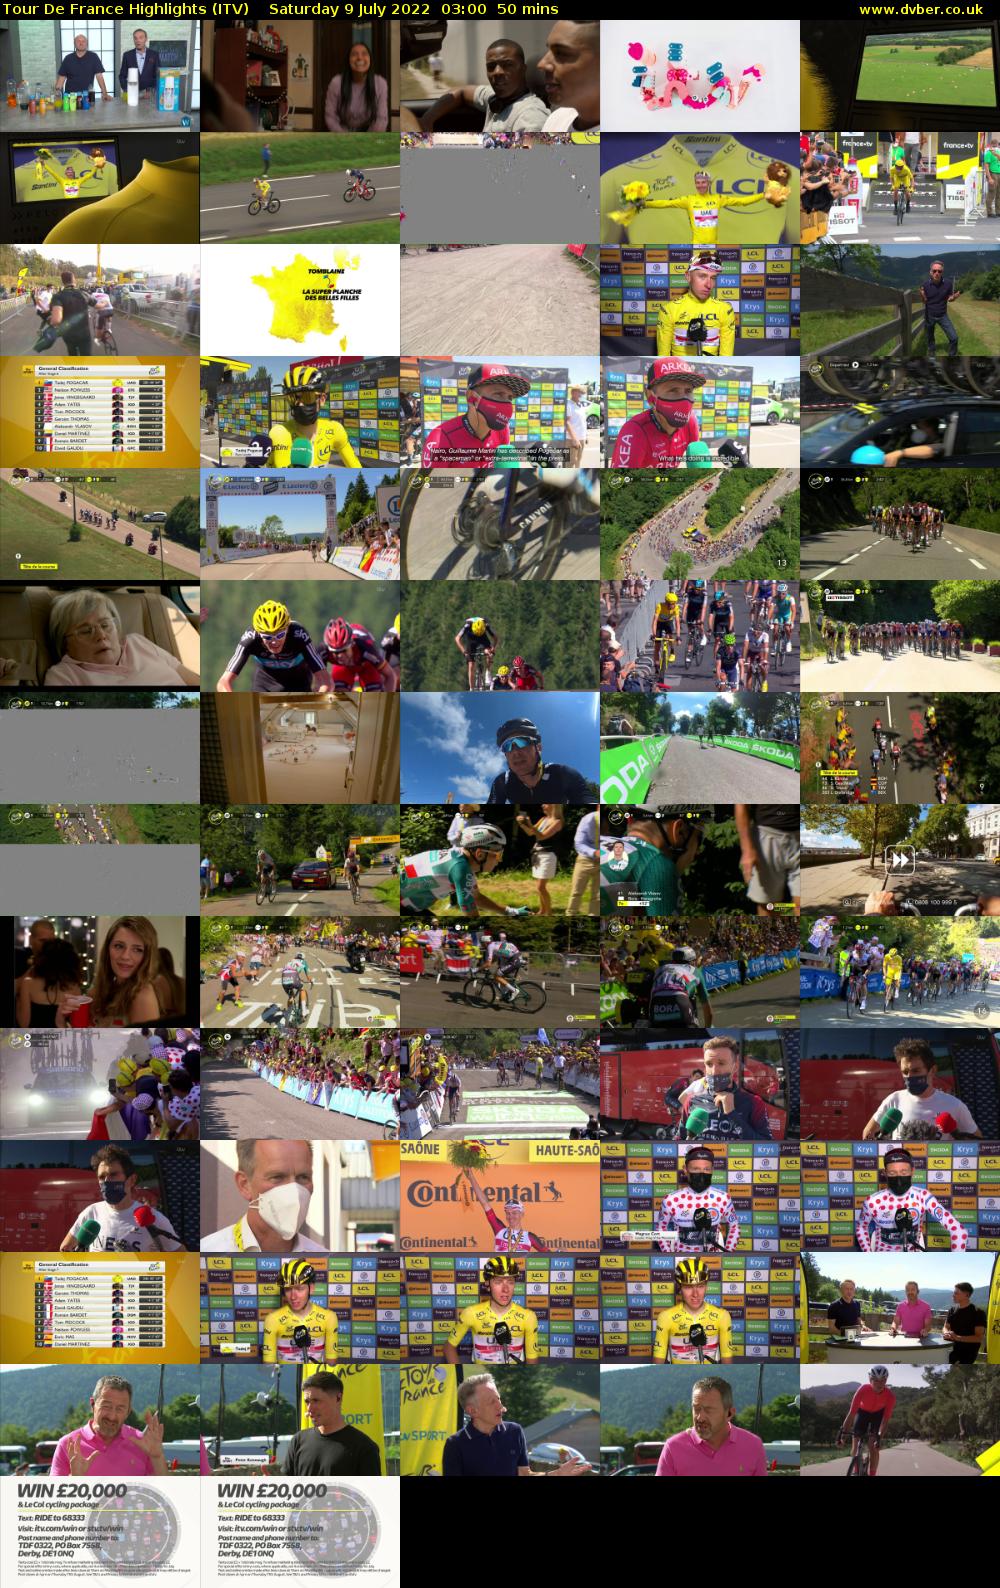 Tour De France Highlights (ITV) Saturday 9 July 2022 03:00 - 03:50